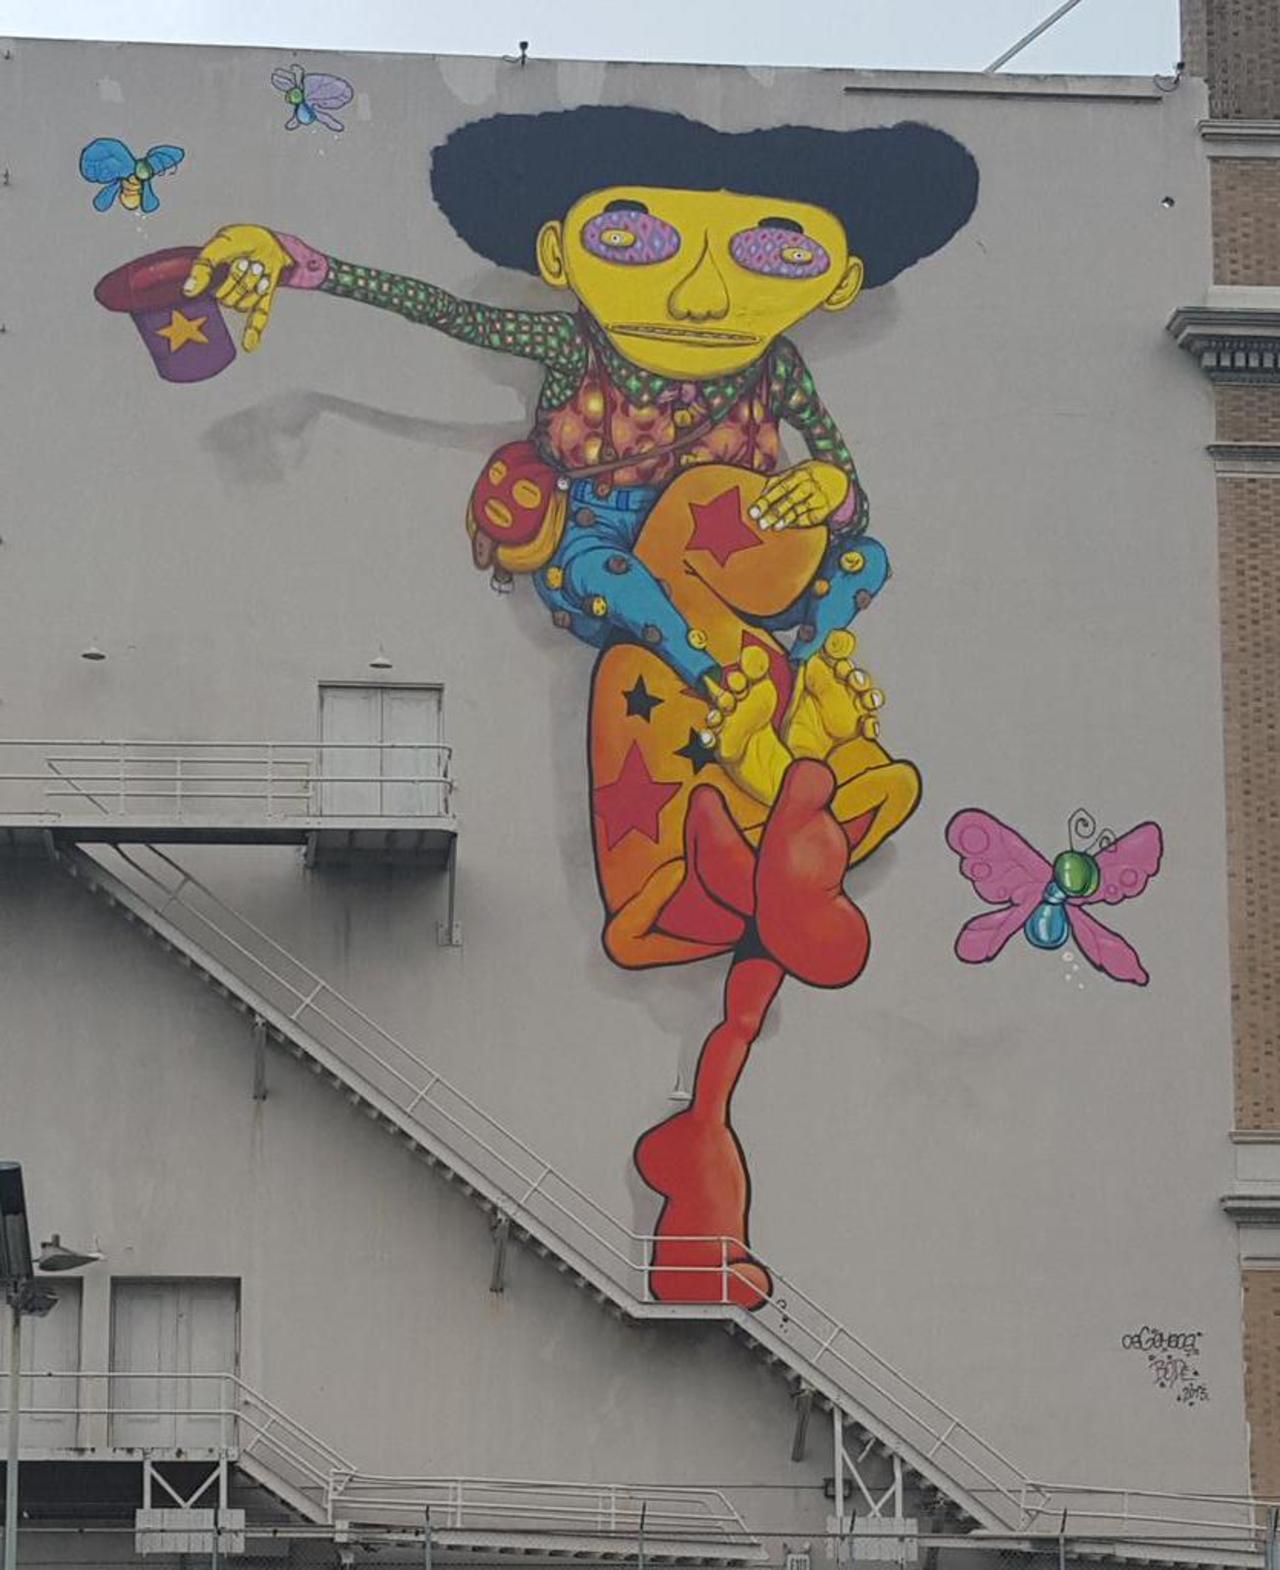 Interesting #graffiti #streetart #mural in #SanFrancisco http://t.co/rzH7Jvtid2